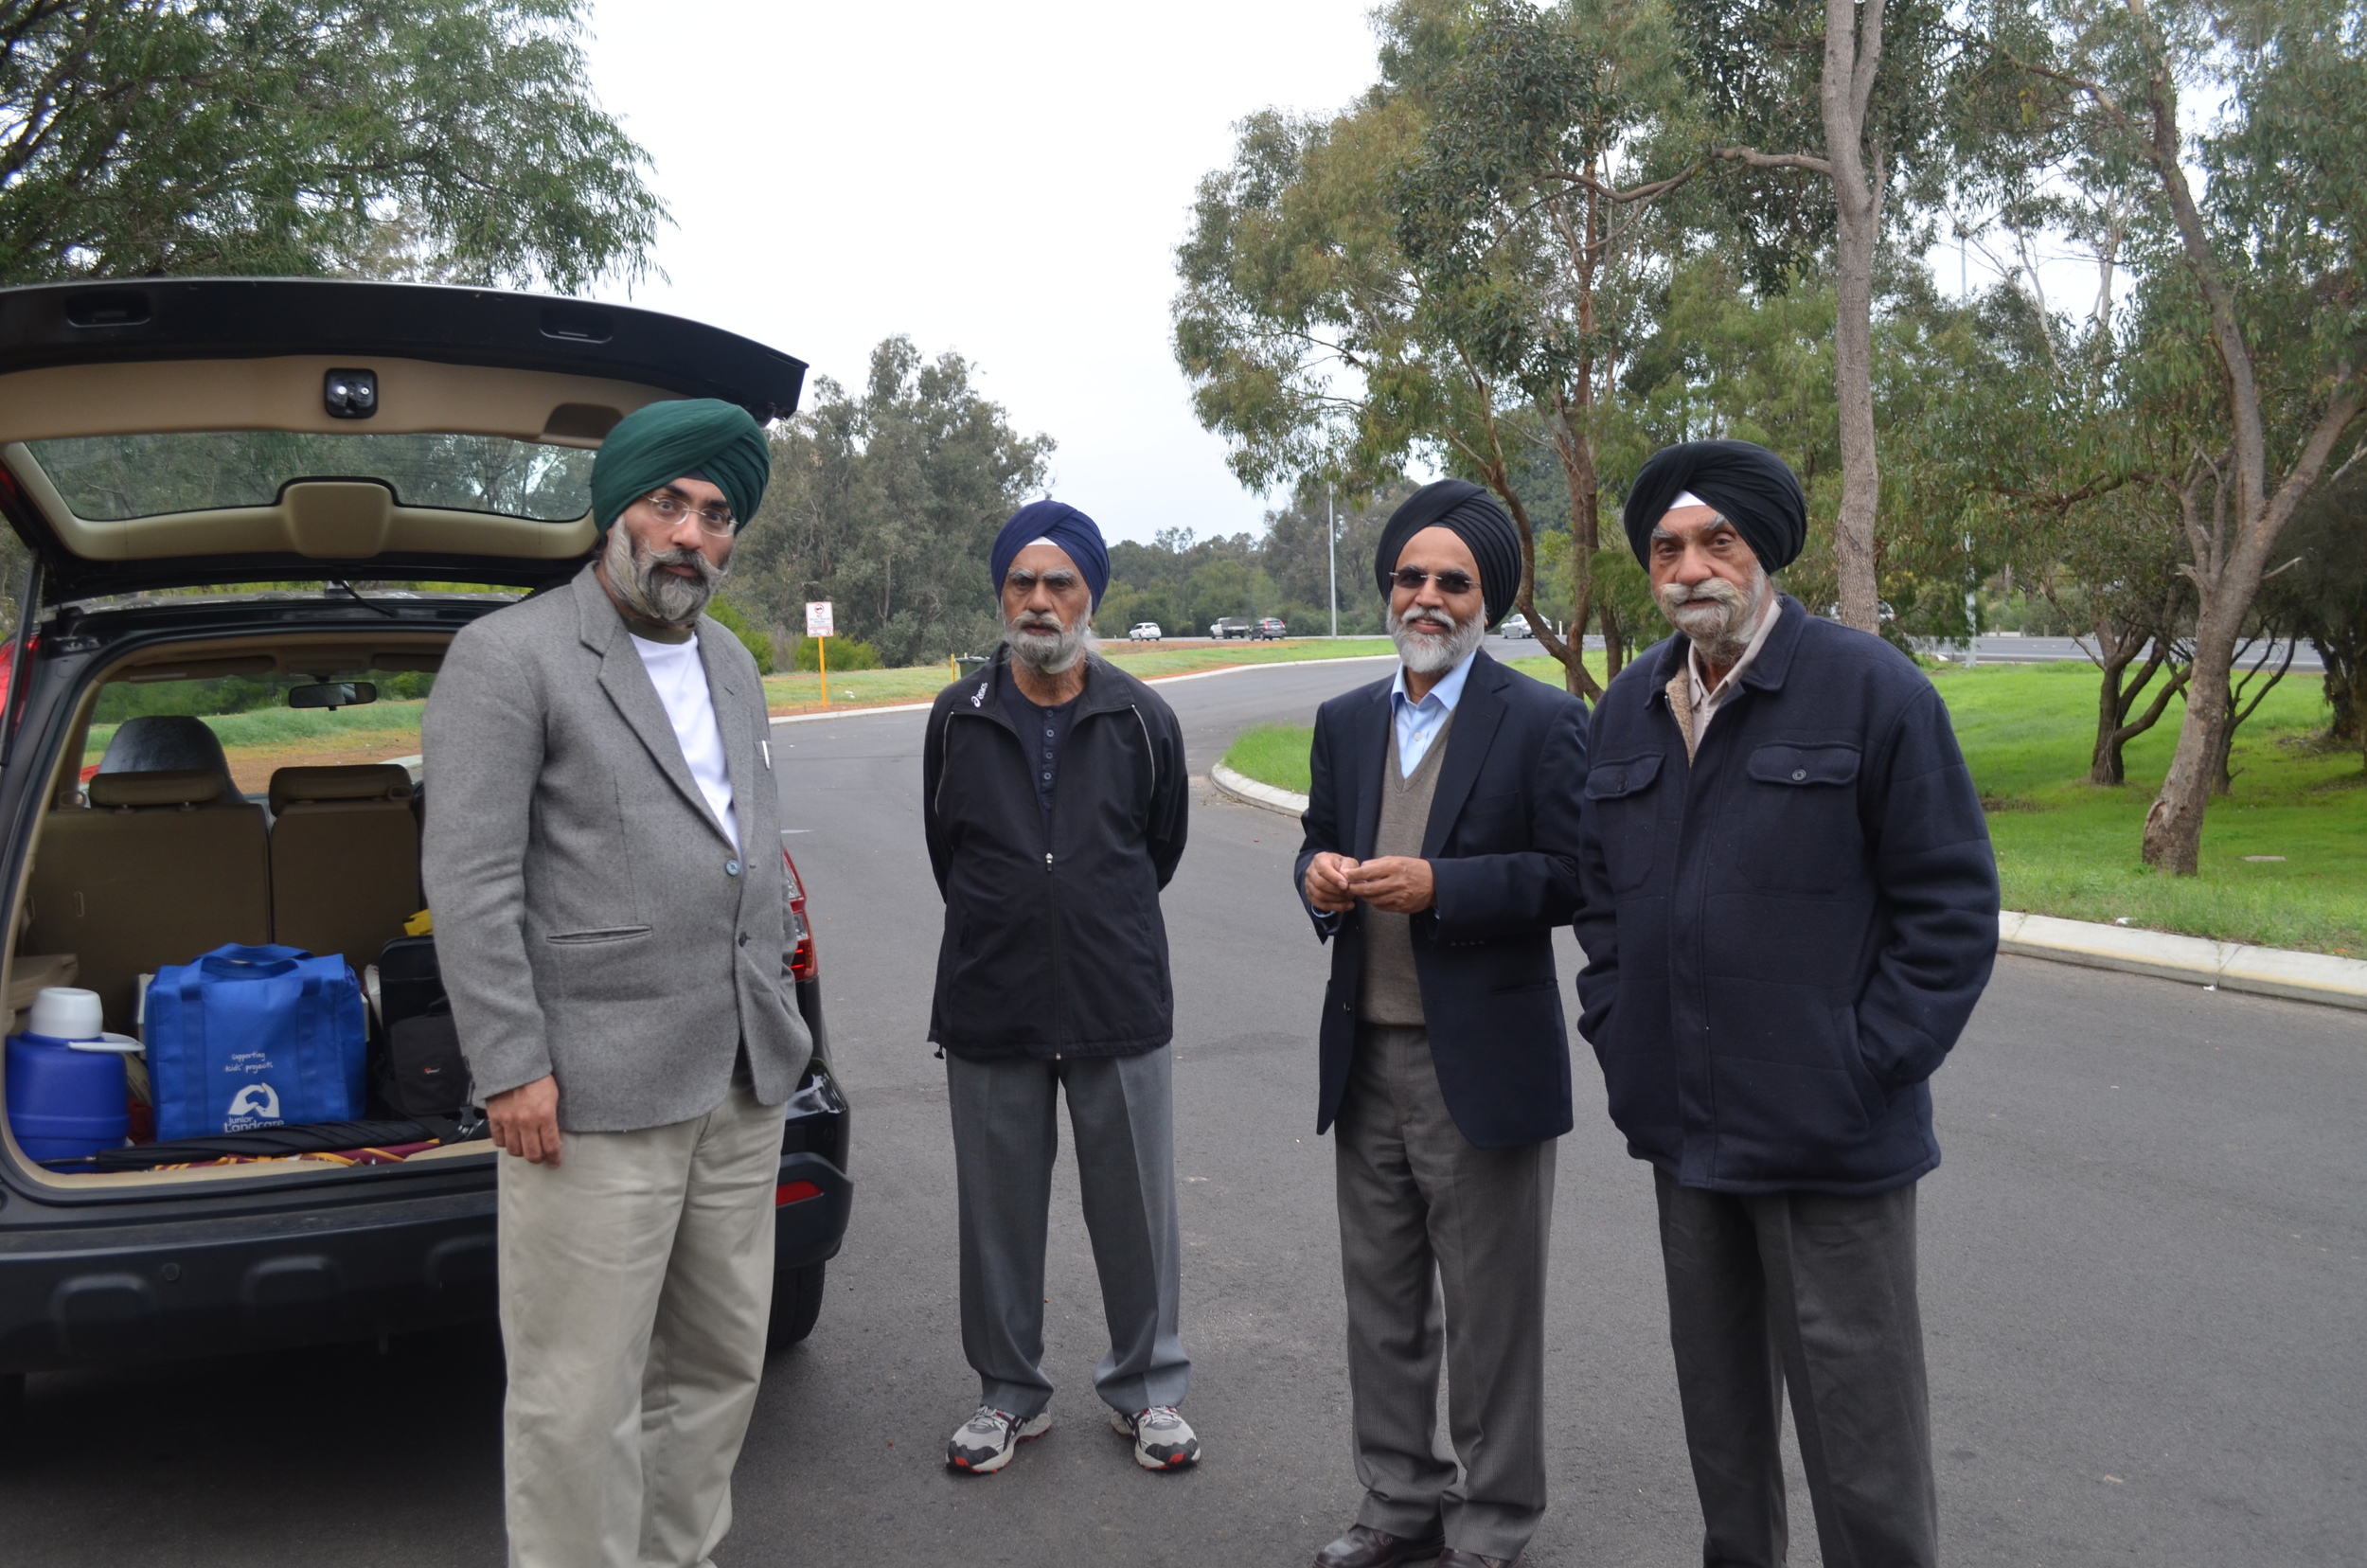 Members of ASHA and the Sikh community (from the left, Tarunpreet Singh, Dr Amarjeet Singh, Amarjit Singh Pabla, Paramjit Singh)